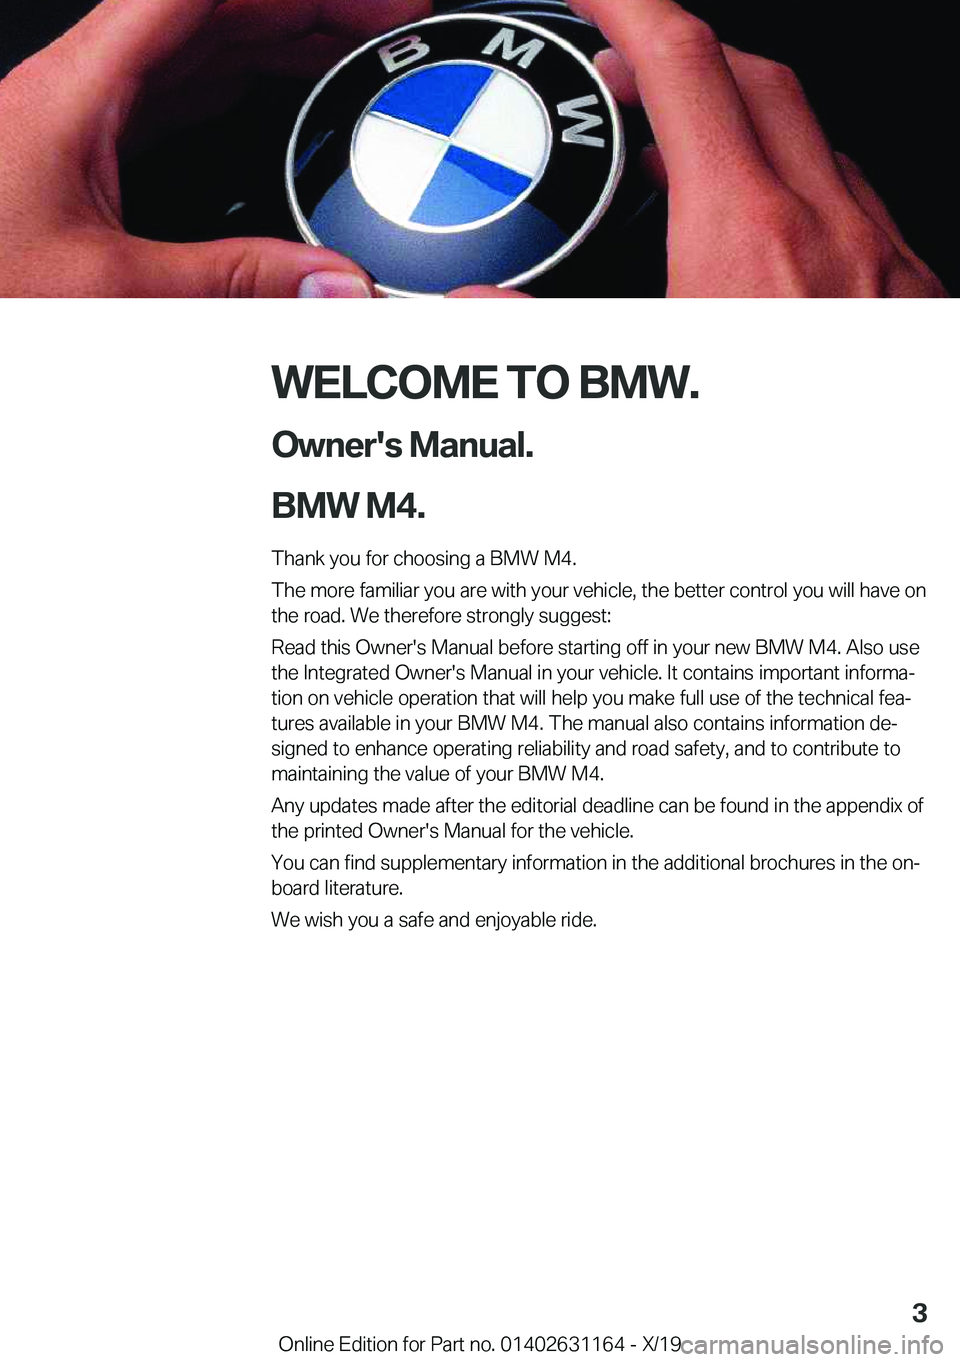 BMW M4 2020  Owners Manual �W�E�L�C�O�M�E��T�O��B�M�W�.�O�w�n�e�r�'�s��M�a�n�u�a�l�.
�B�M�W��M�4�.
�T�h�a�n�k��y�o�u��f�o�r��c�h�o�o�s�i�n�g��a��B�M�W��M�4�.
�T�h�e��m�o�r�e��f�a�m�i�l�i�a�r��y�o�u��a�r�e��w�